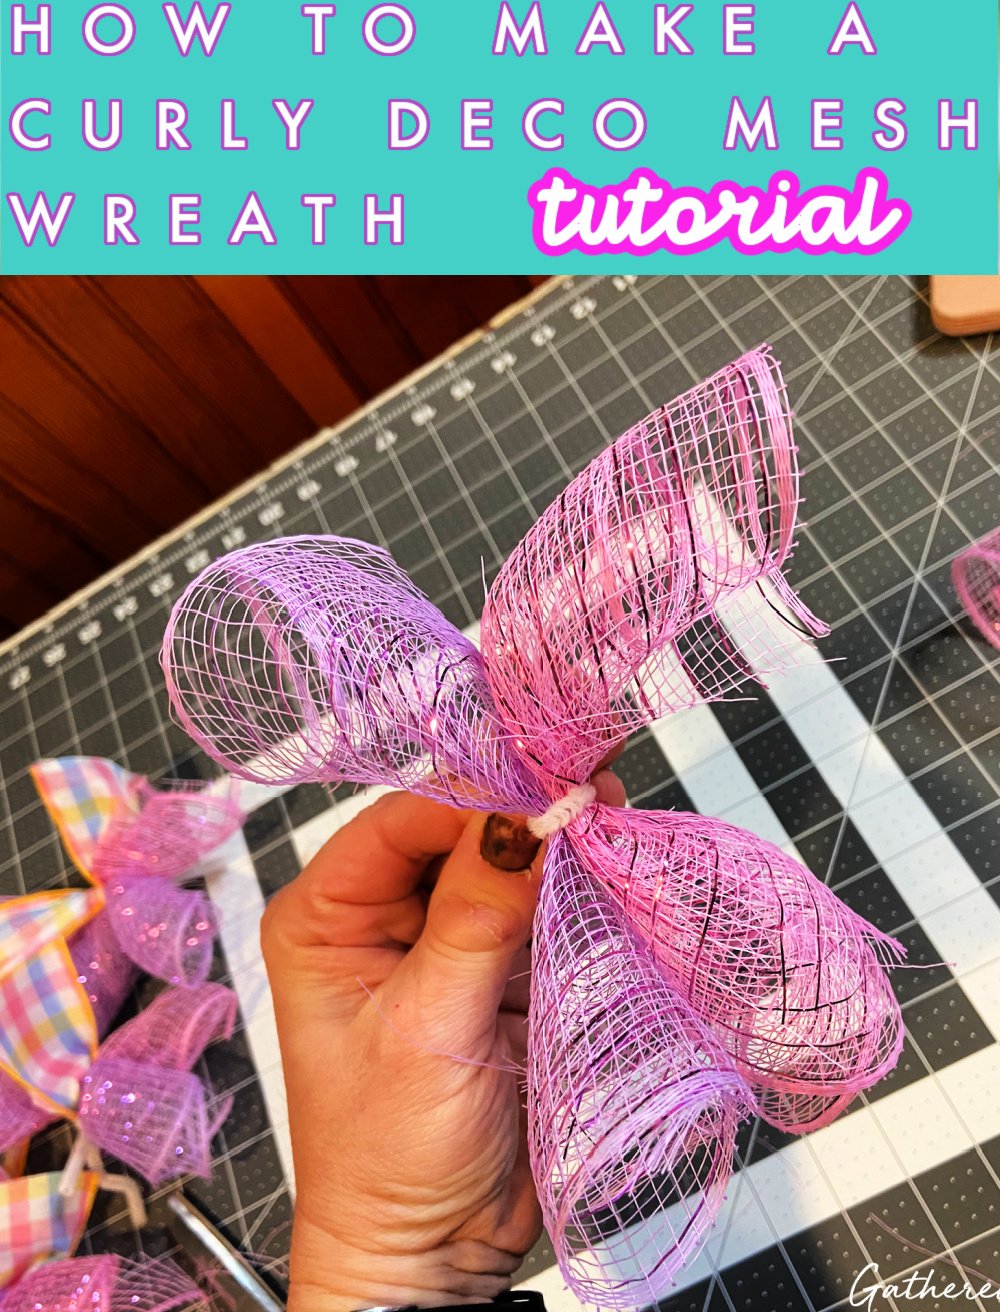 Steps to make a mesh wreath: